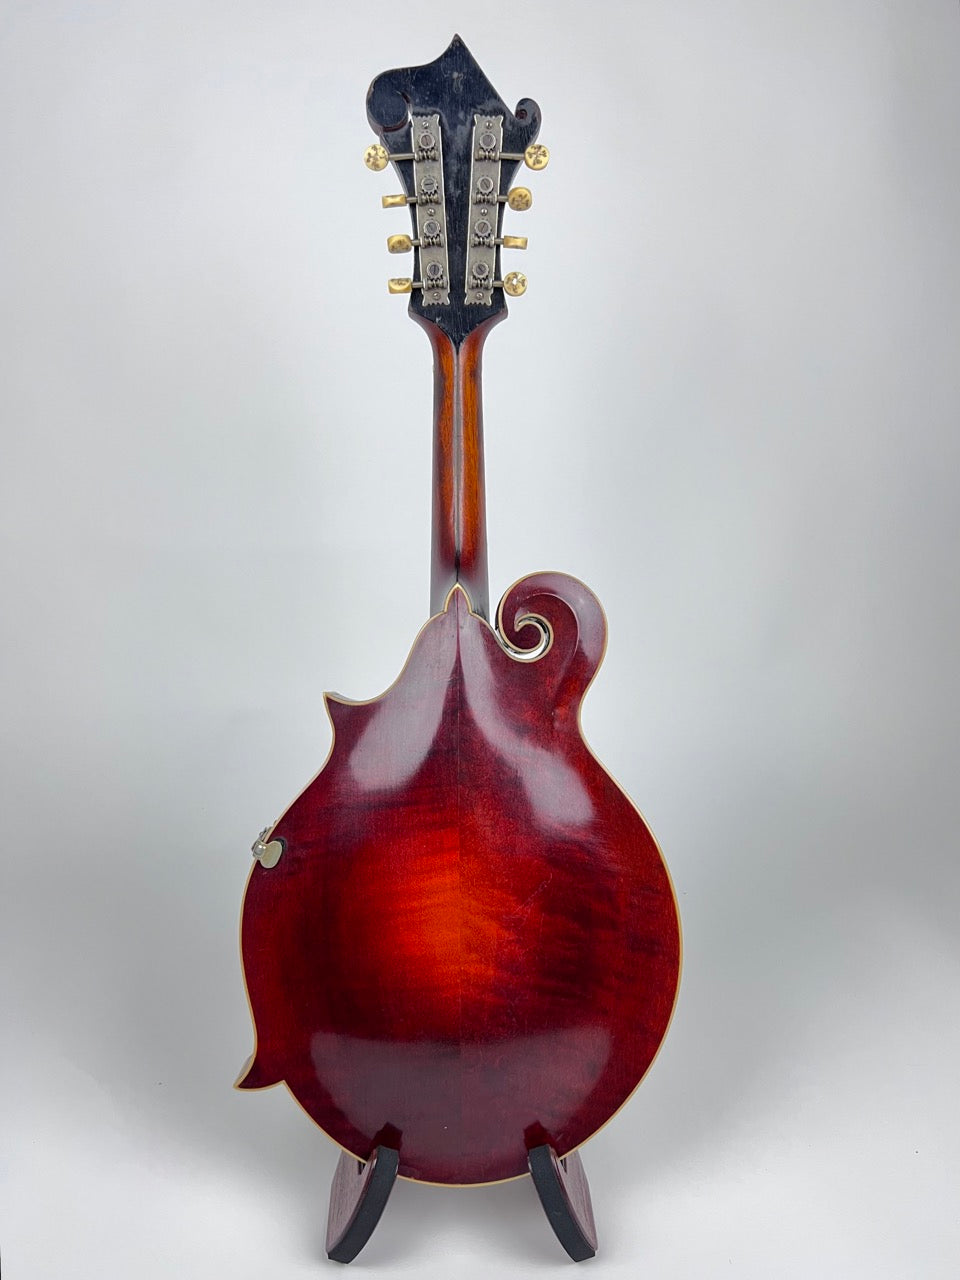 1918 Gibson F4 Mandolin